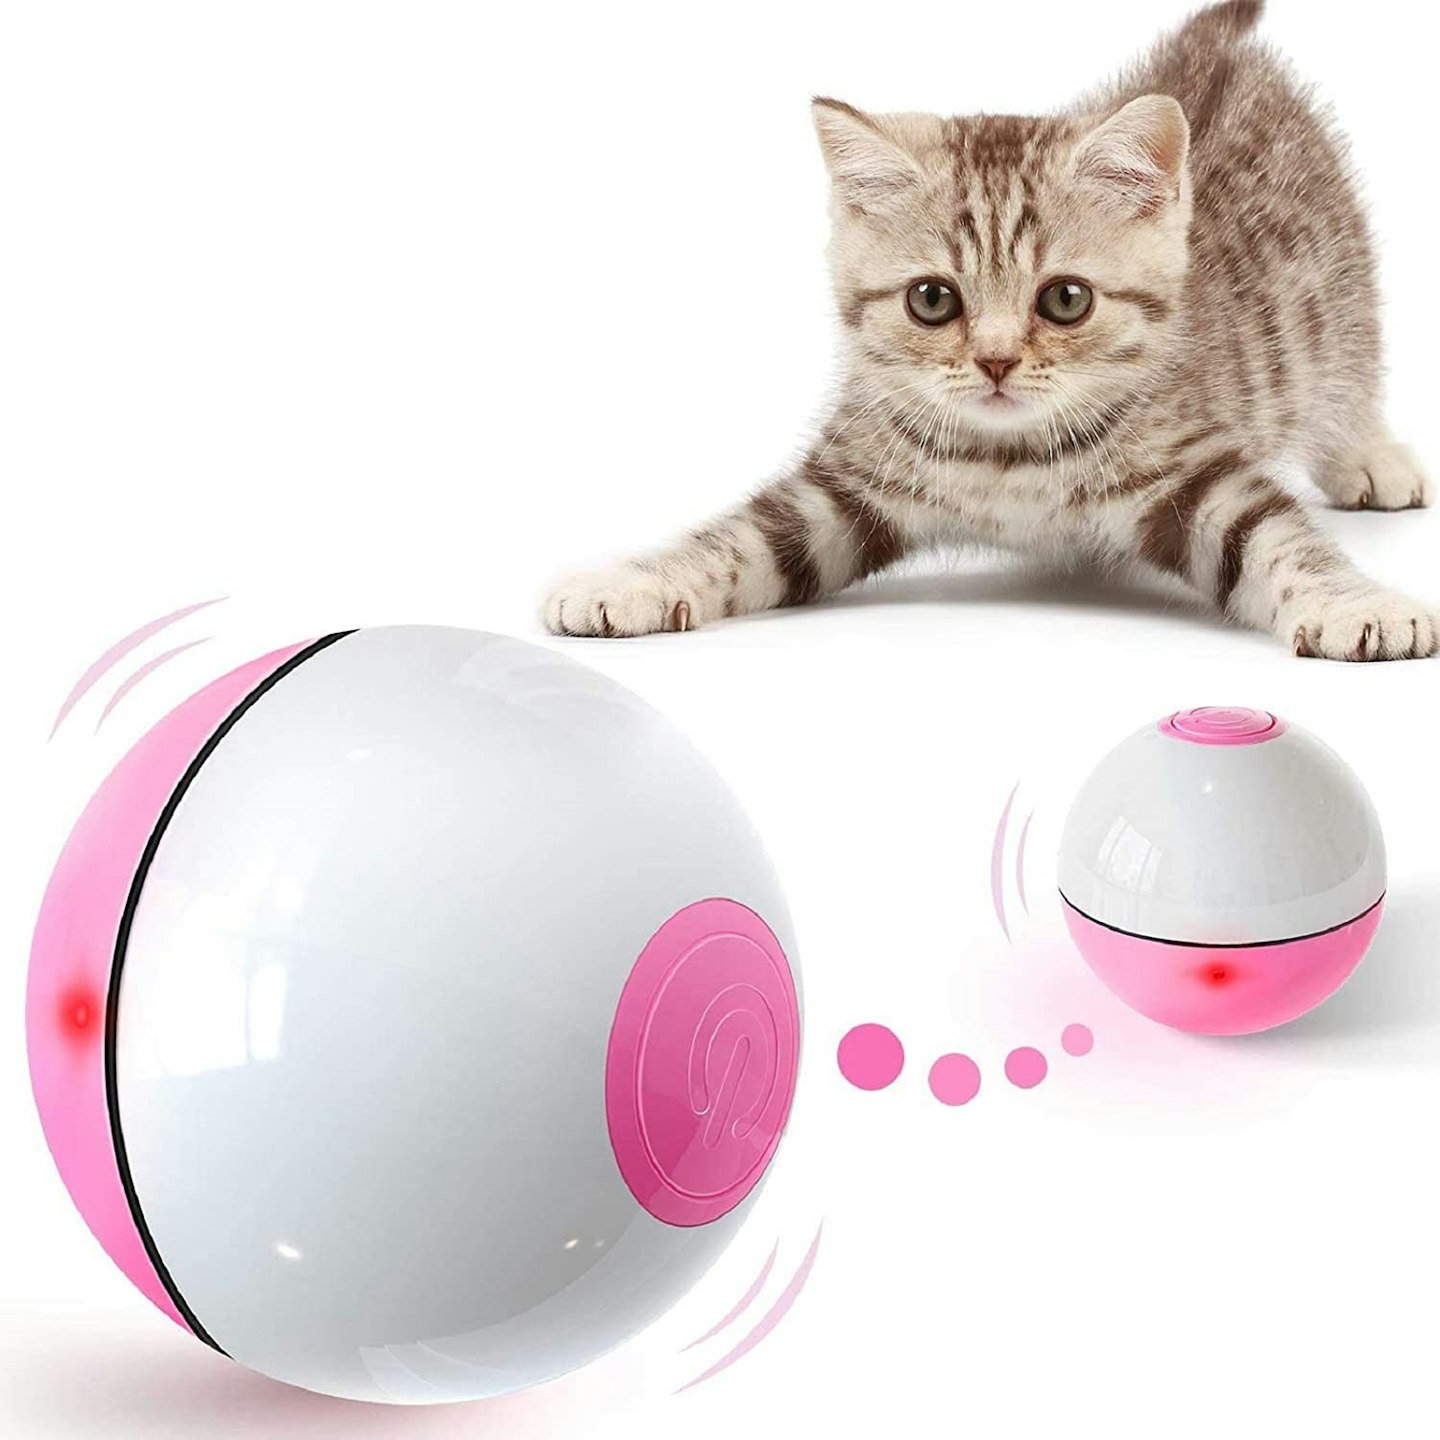 Iokheira Interactive Cat Toy Ball